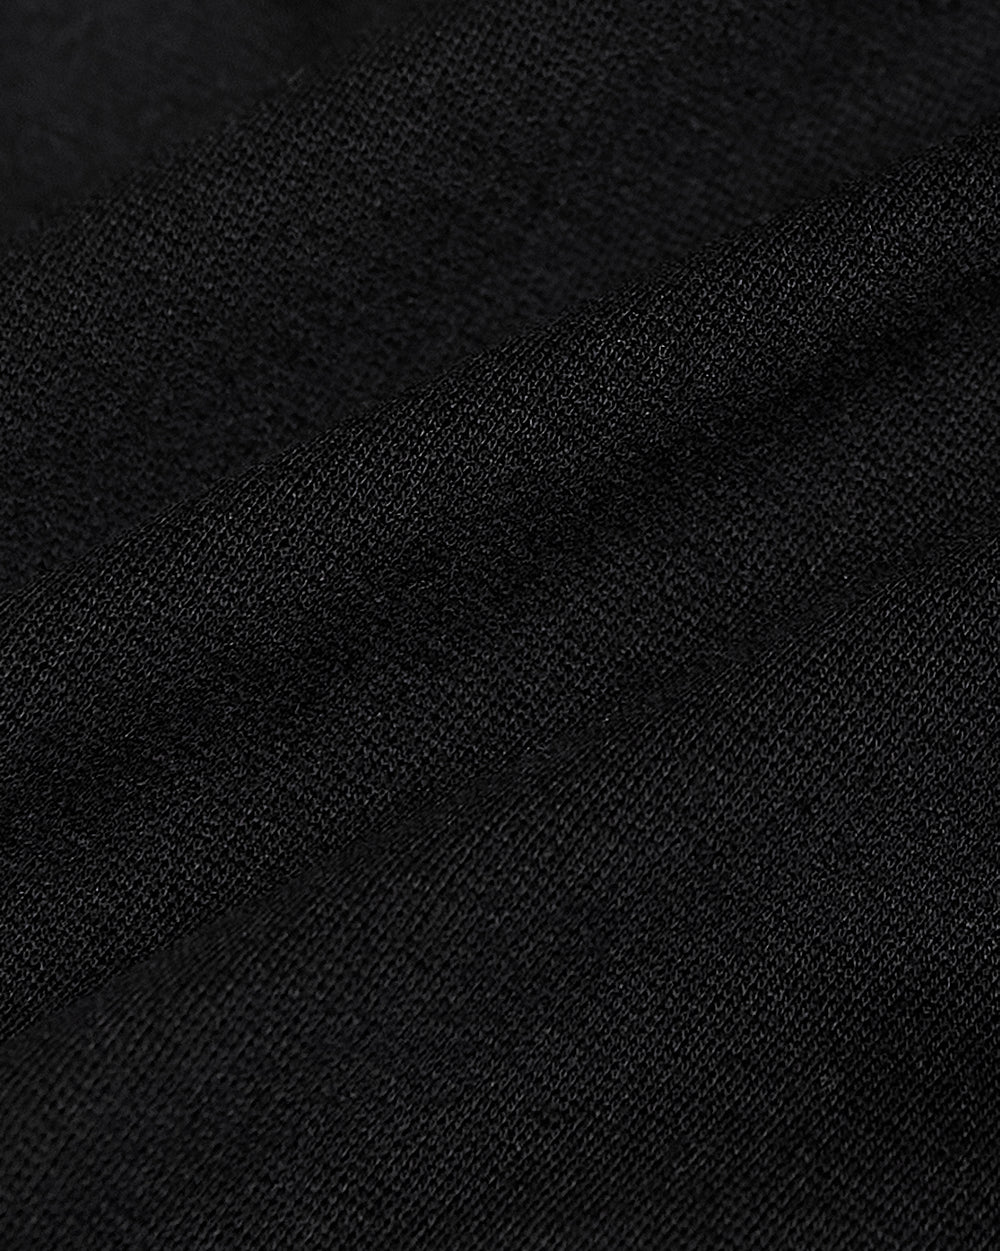 Black Comfort Knit Blazer